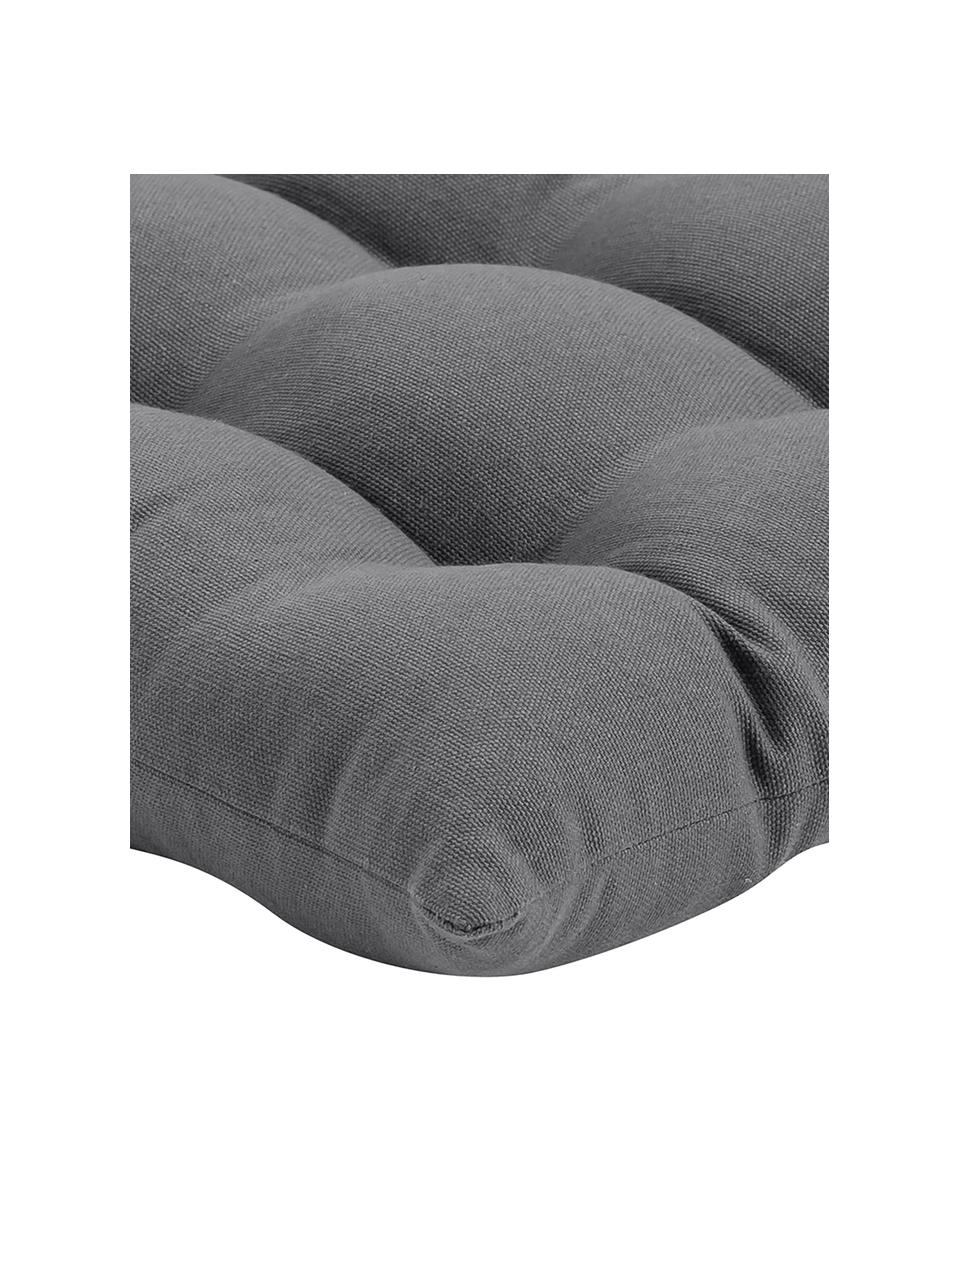 Baumwoll-Sitzkissen Ava in Dunkelgrau, Bezug: 100% Baumwolle, Dunkelgrau, B 40 x L 40 cm